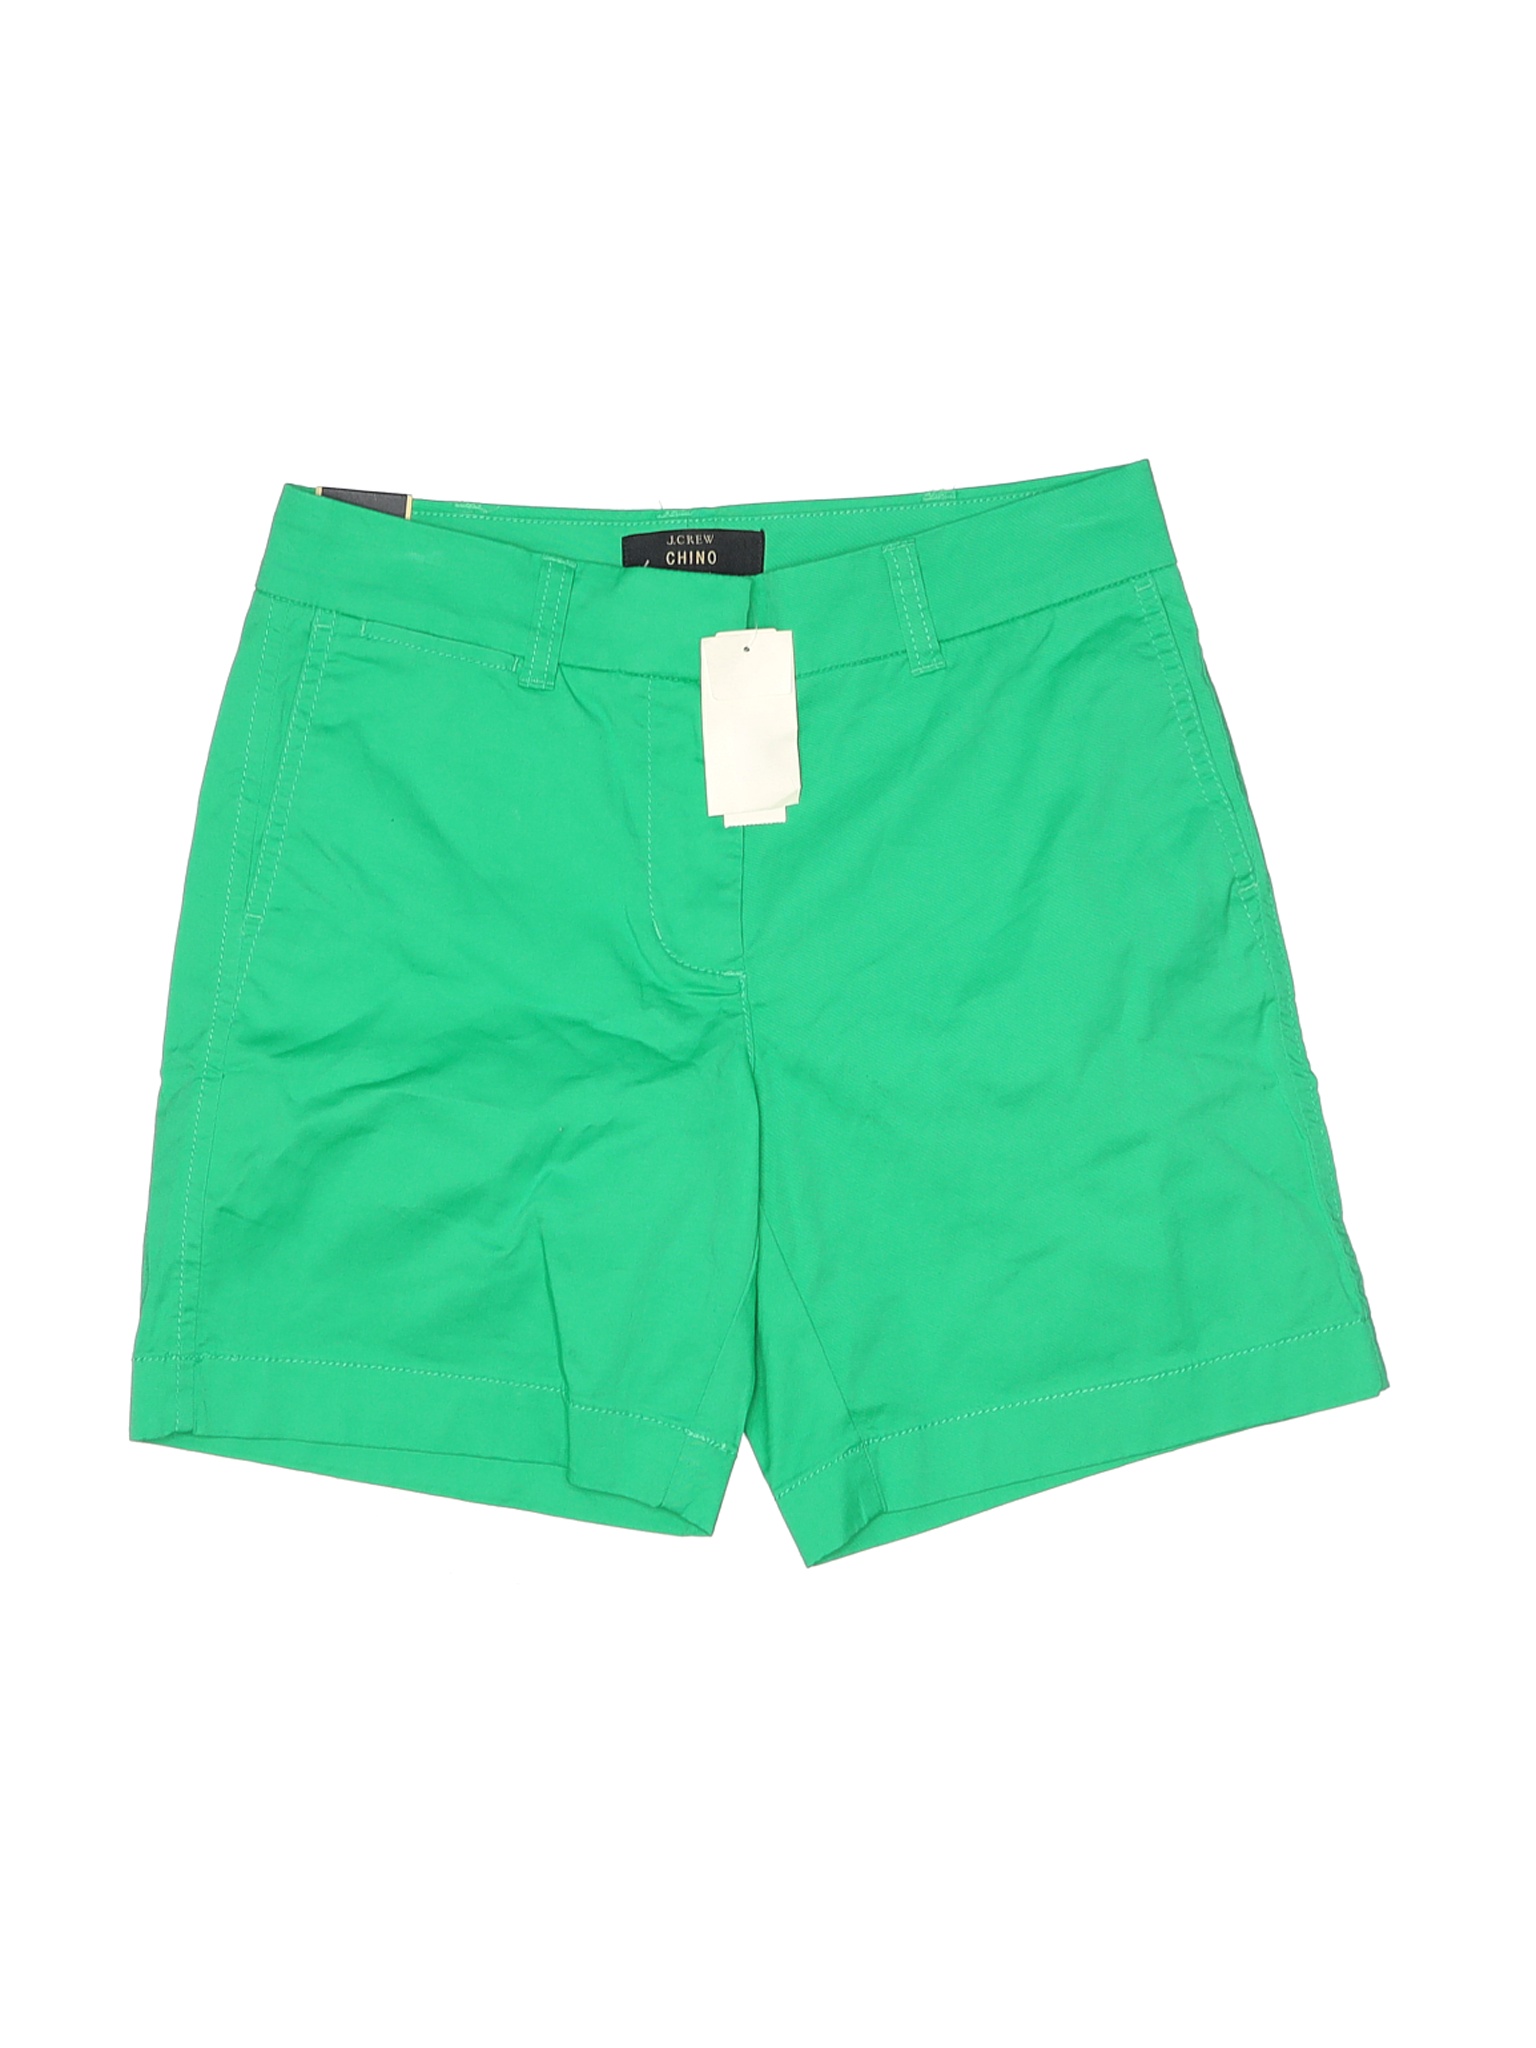 NWT J.Crew Women Green Khaki Shorts 00 | eBay